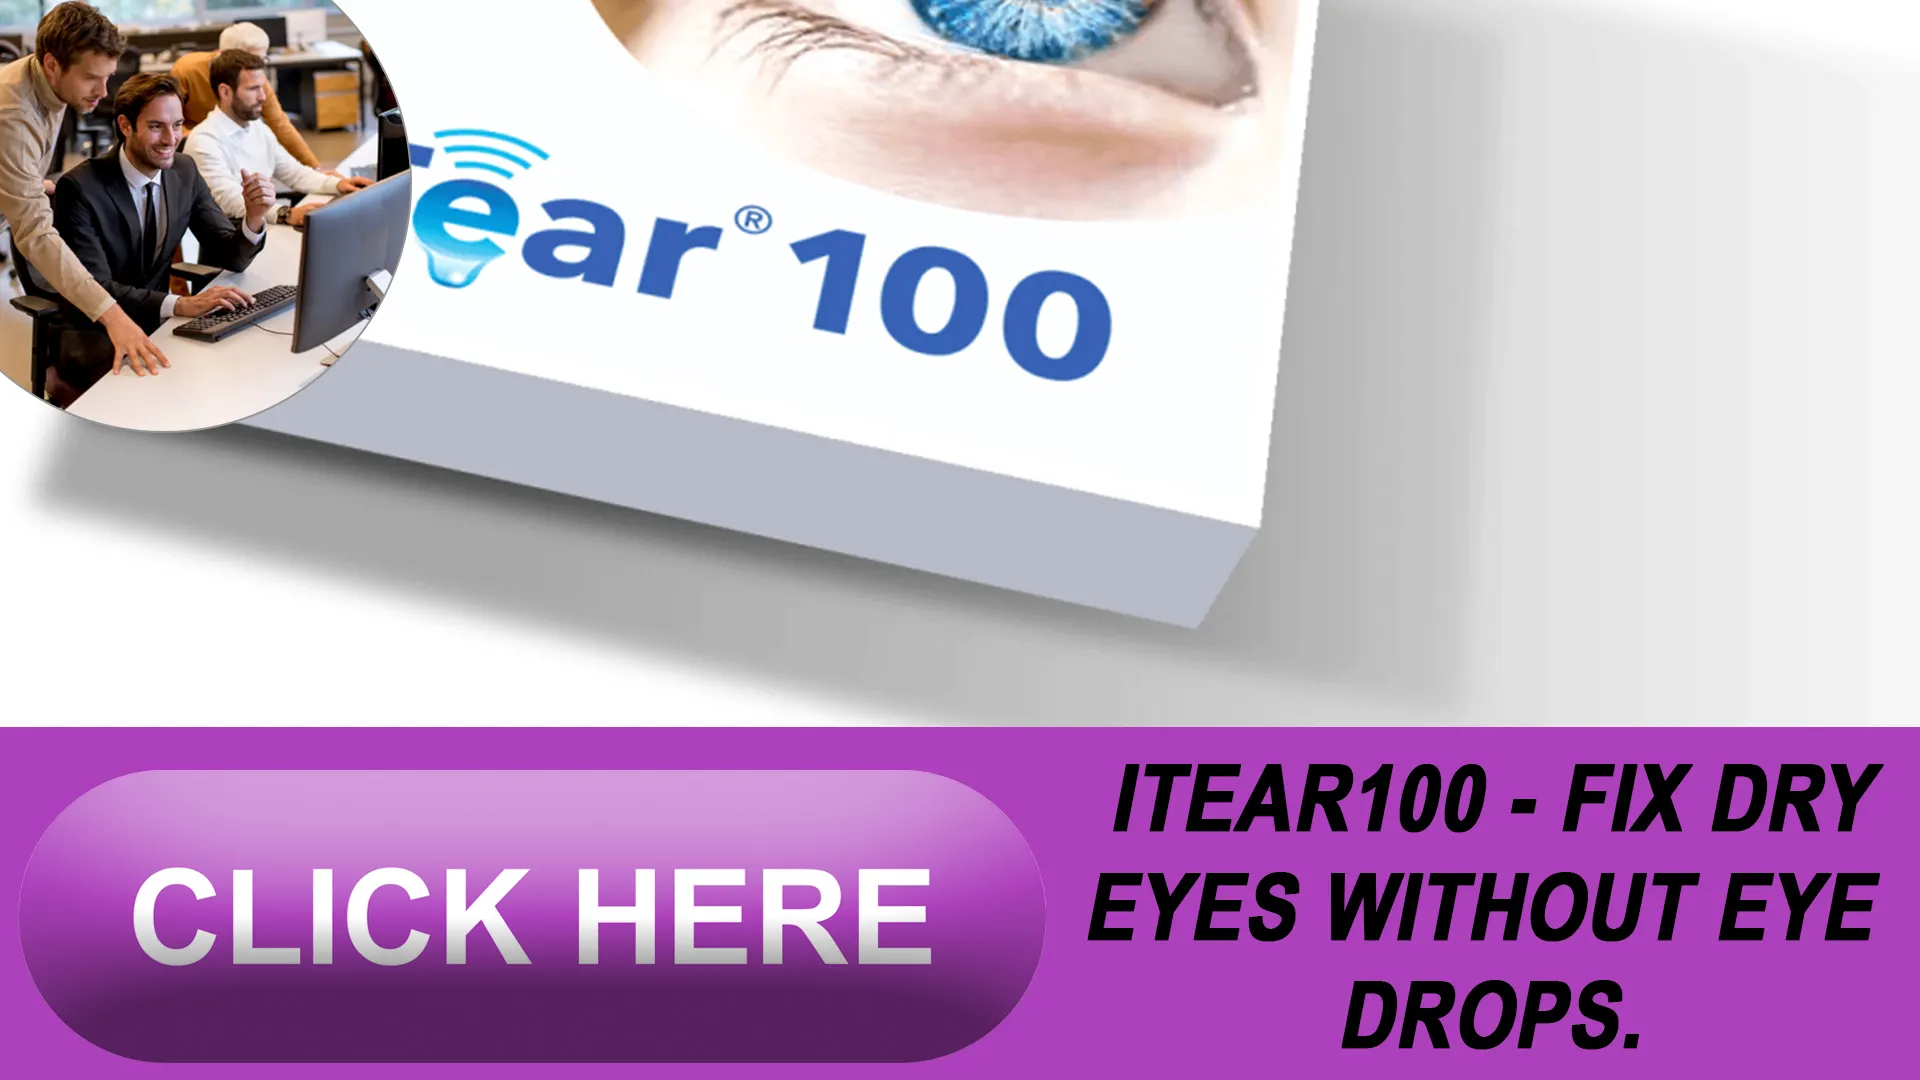 Innovative Technology: The iTEAR100 Device